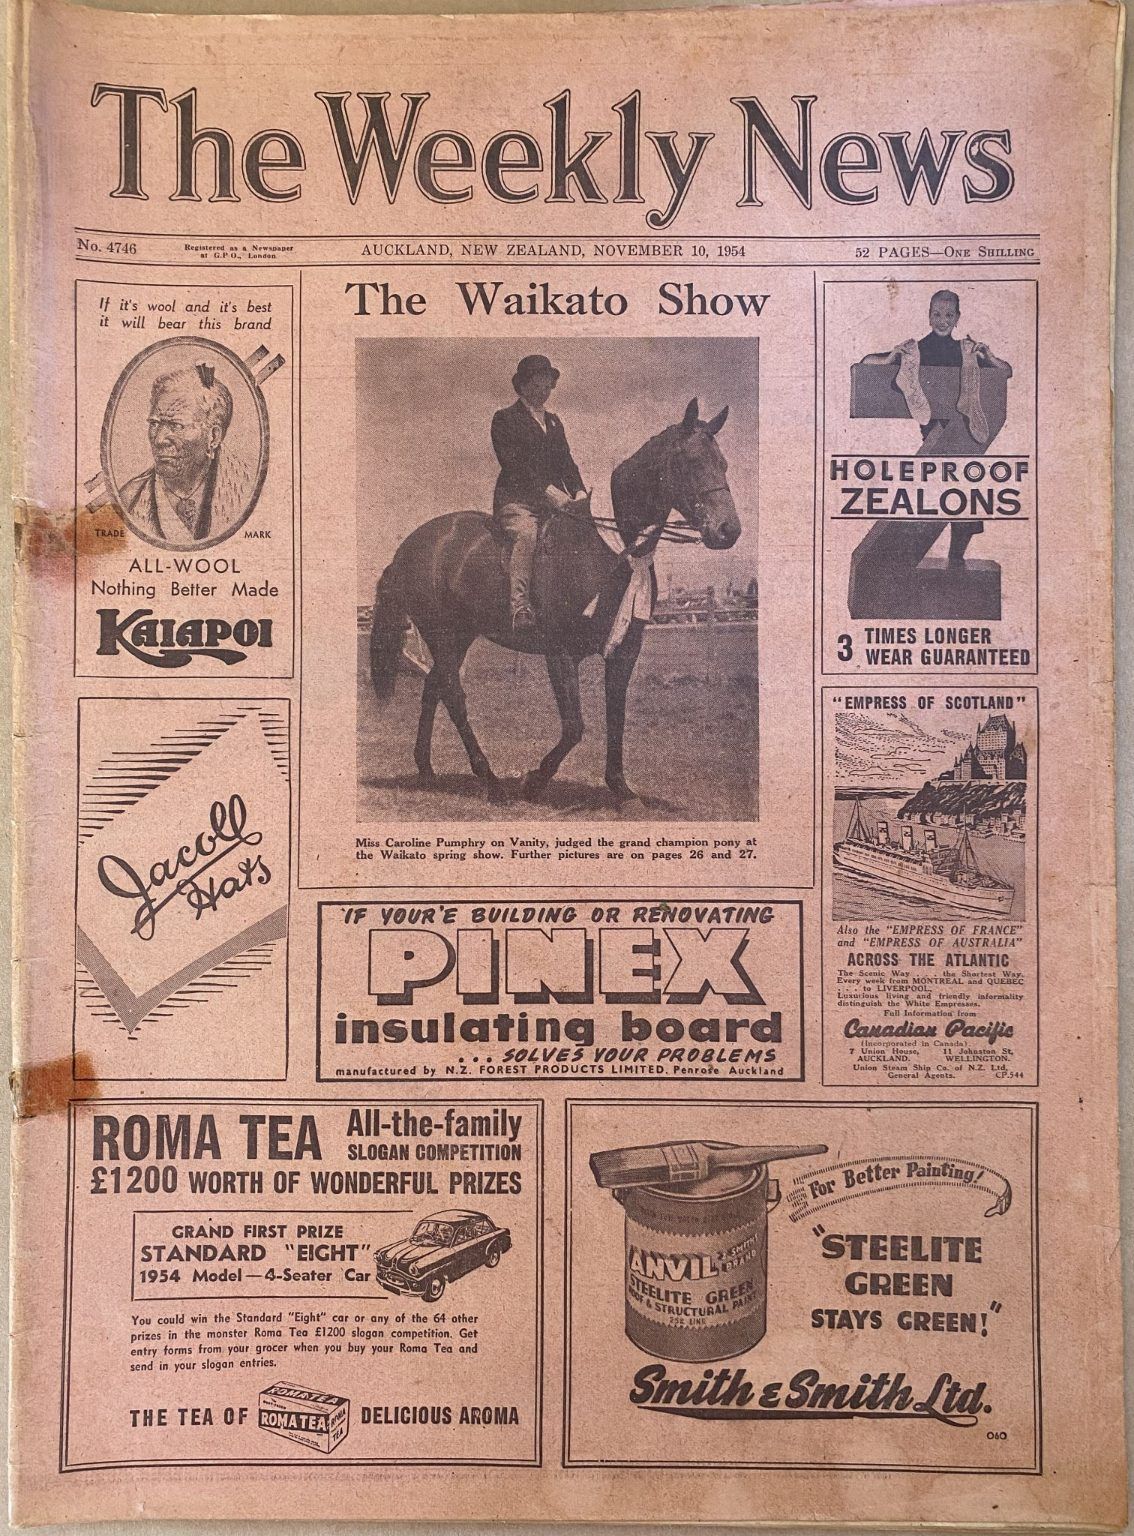 OLD NEWSPAPER: The Weekly News - No. 4746, 10 November 1954